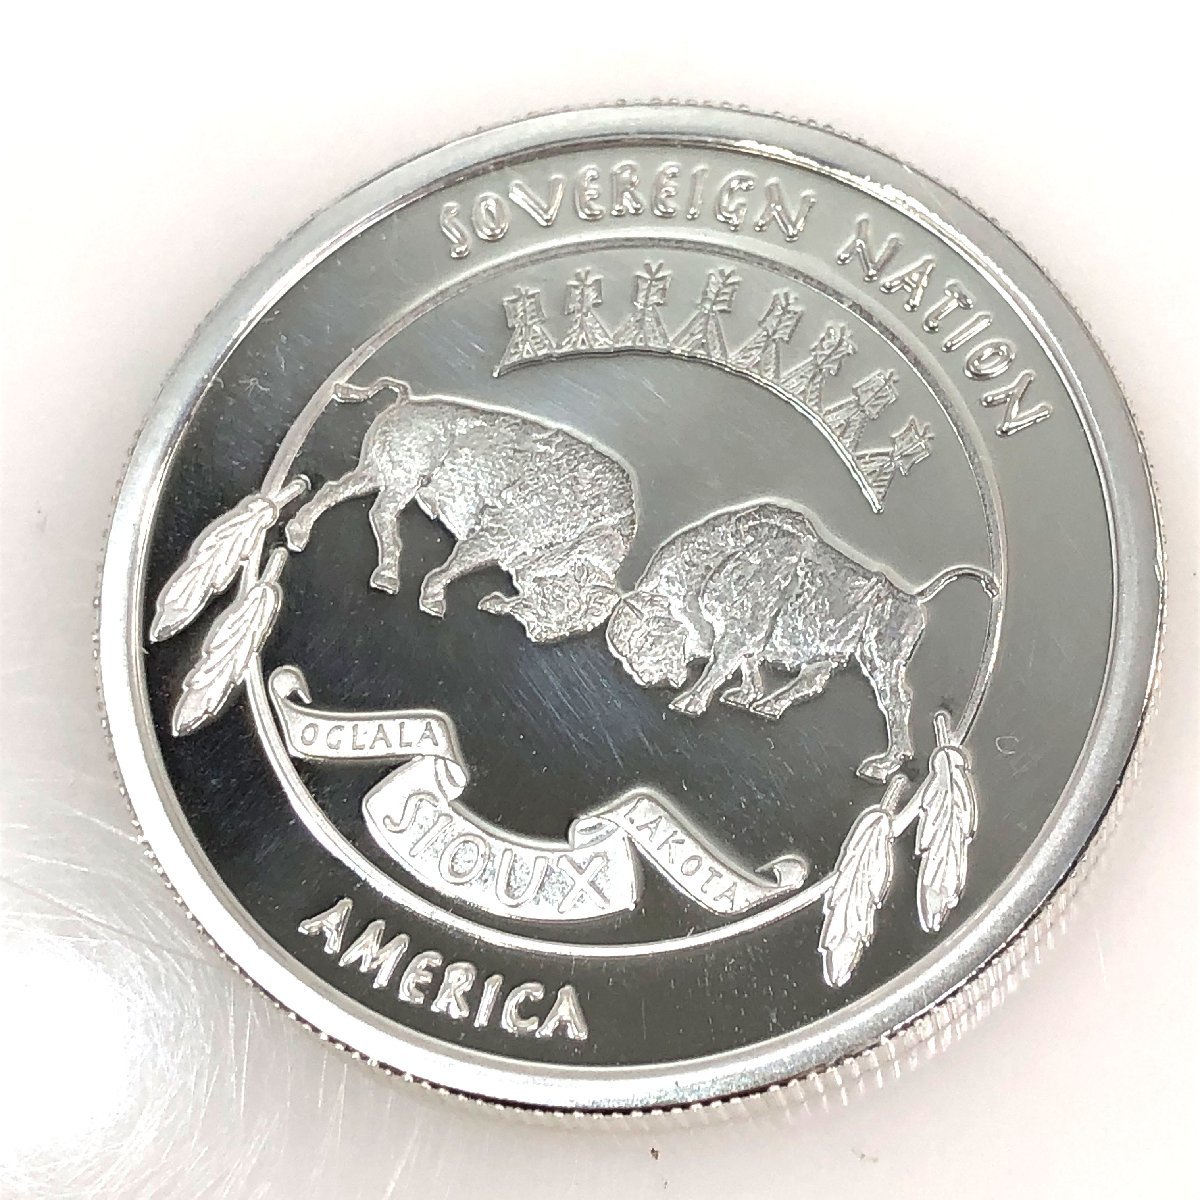  beautiful goods Indian Hsu group Buffalo silver coin 2020 year America original silver silver 999 1 ounce 1 dollar 1oz approximately 31.1g coin medal *